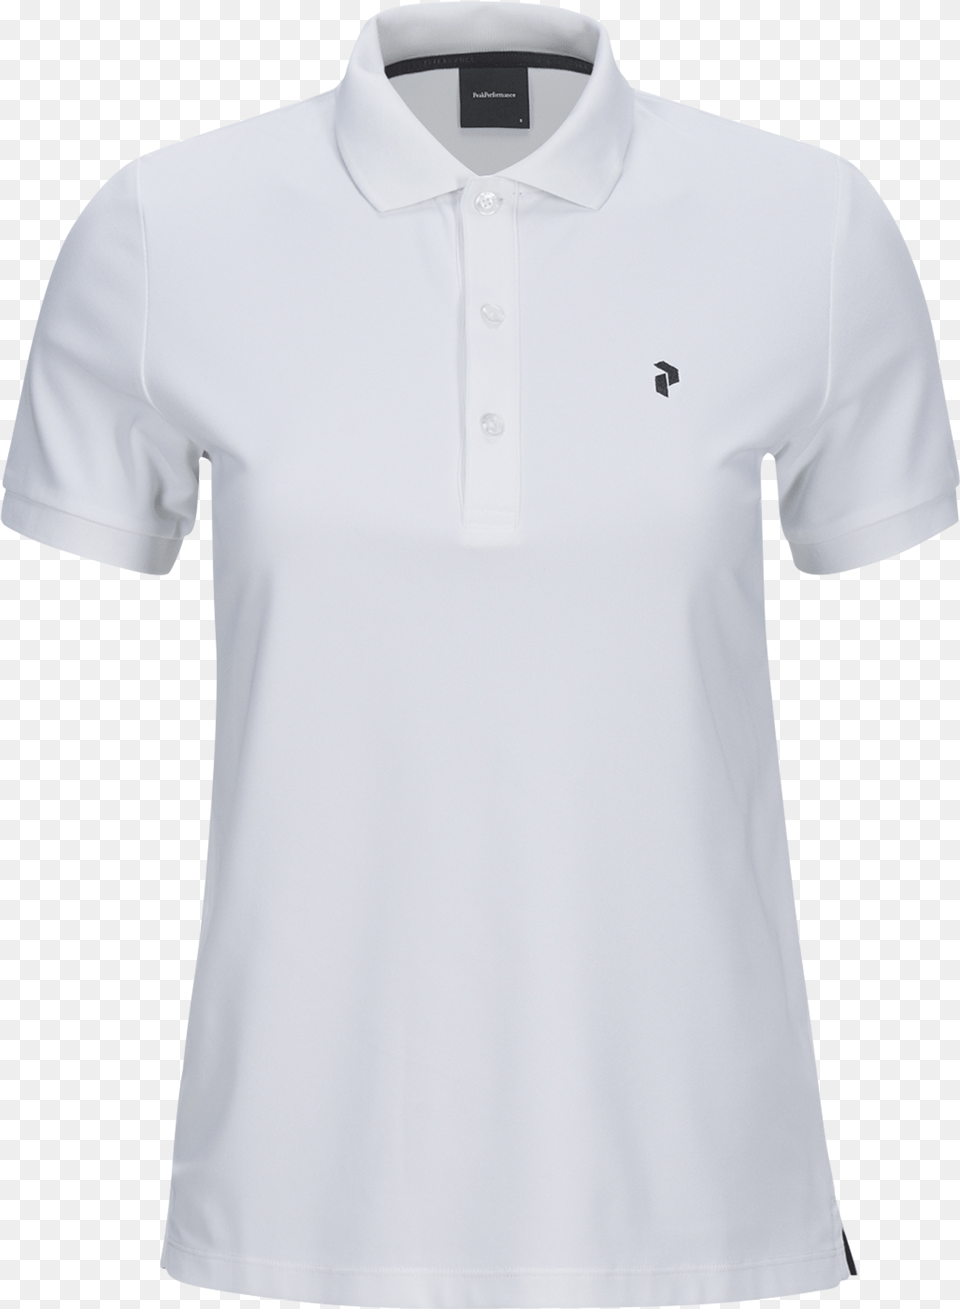 Nike Golf White Polo, Clothing, Shirt, T-shirt Png